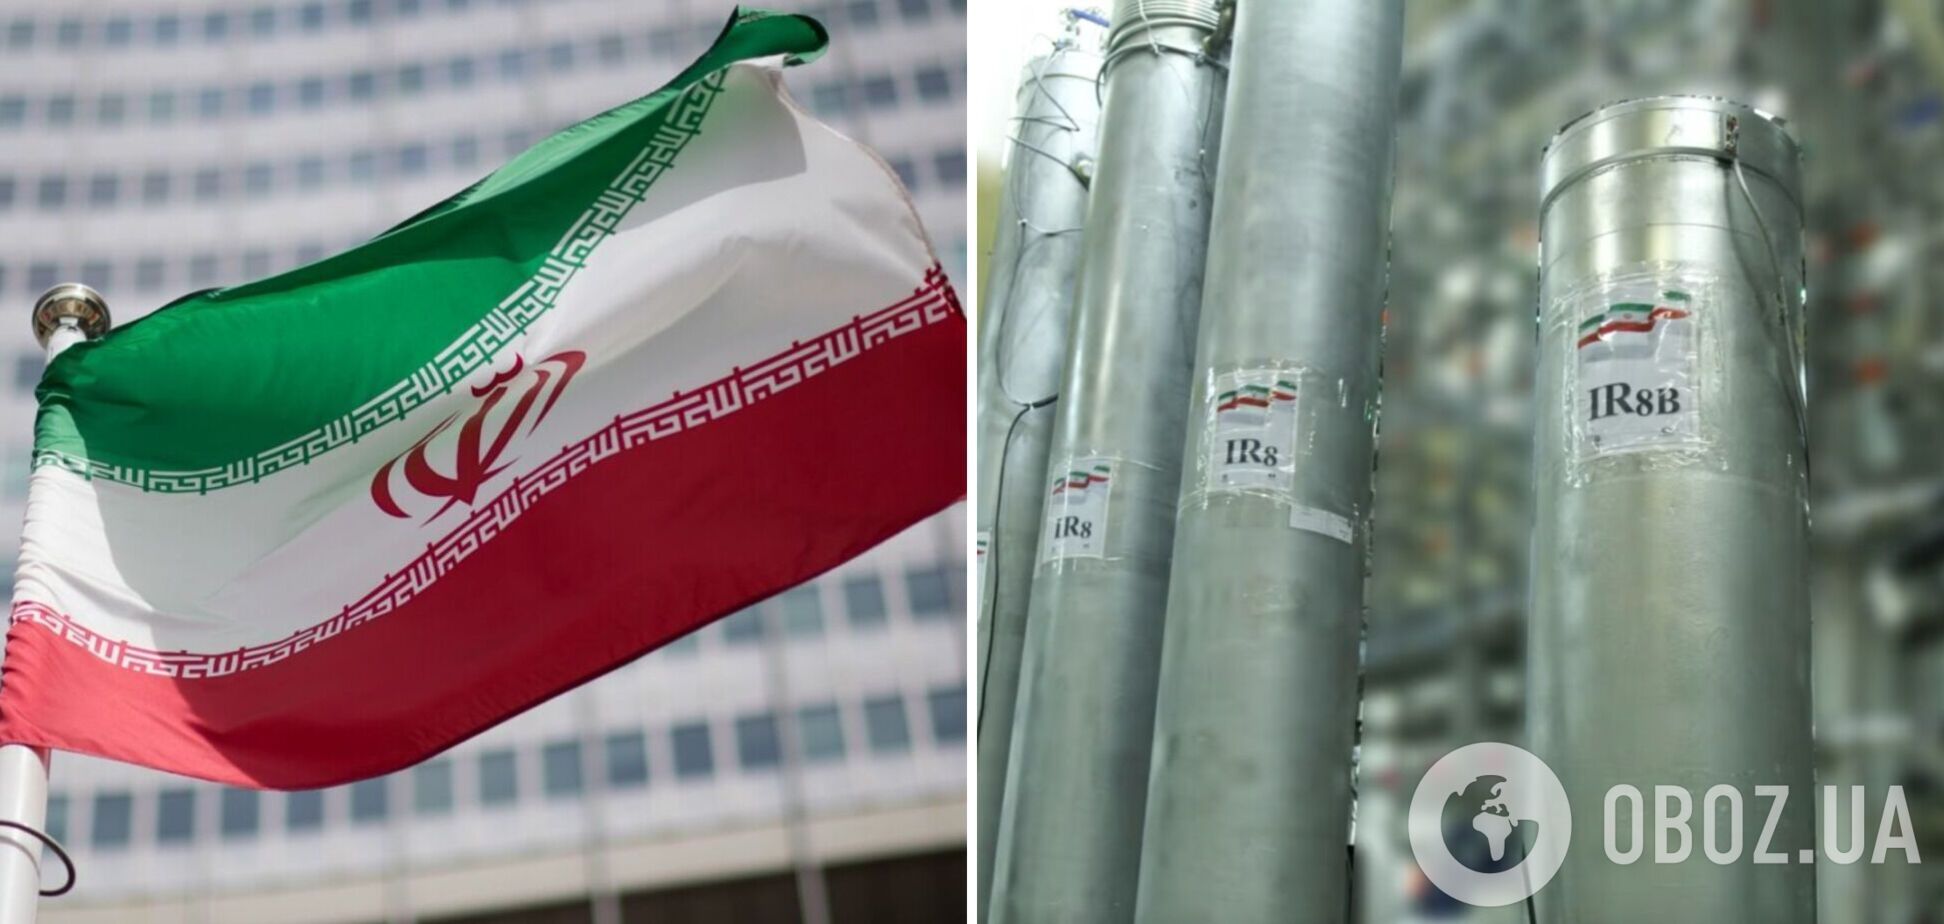 Иран активно развивает свою ядерную программу